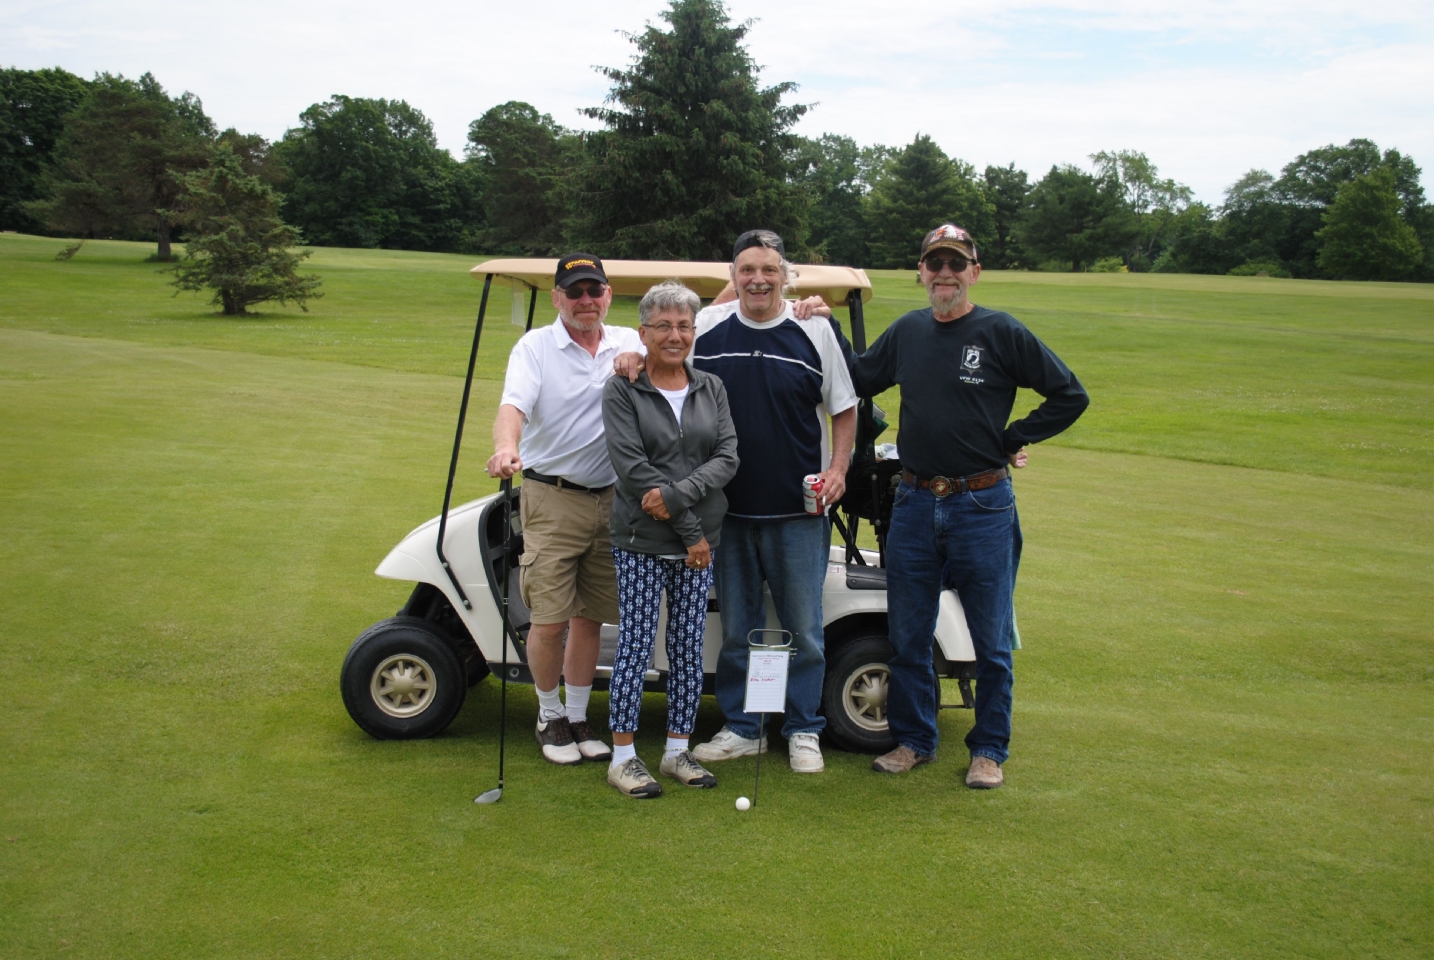 Village Green Golf Course, Newaygo, MI

Dan Overkamp
Marty Busser
Mike Barnes
Ellen Slater
